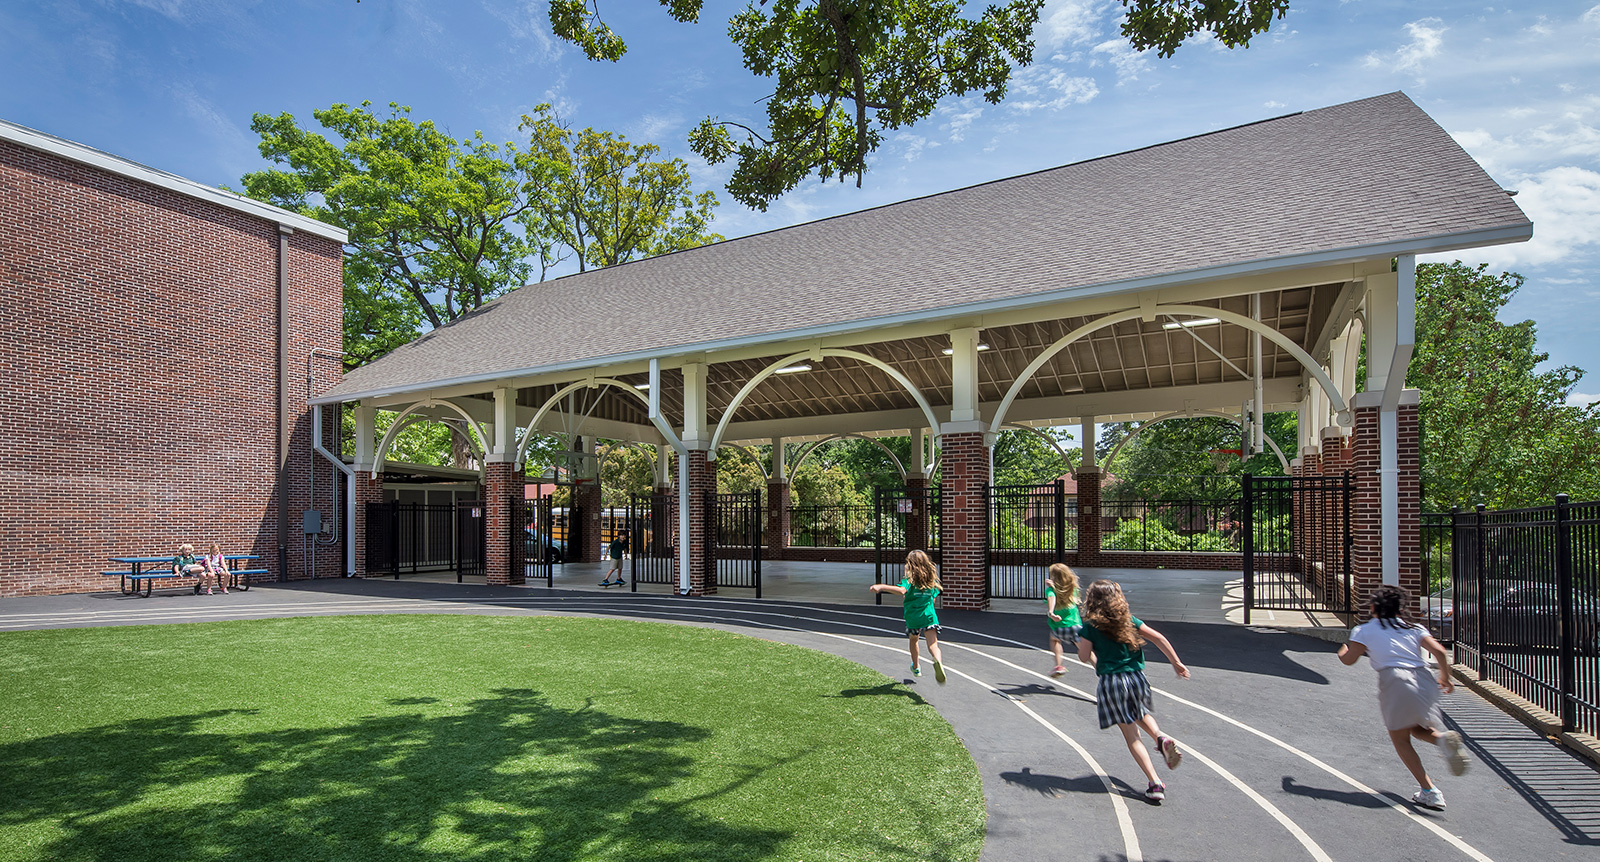 Forest Park Elementary School Pavilion